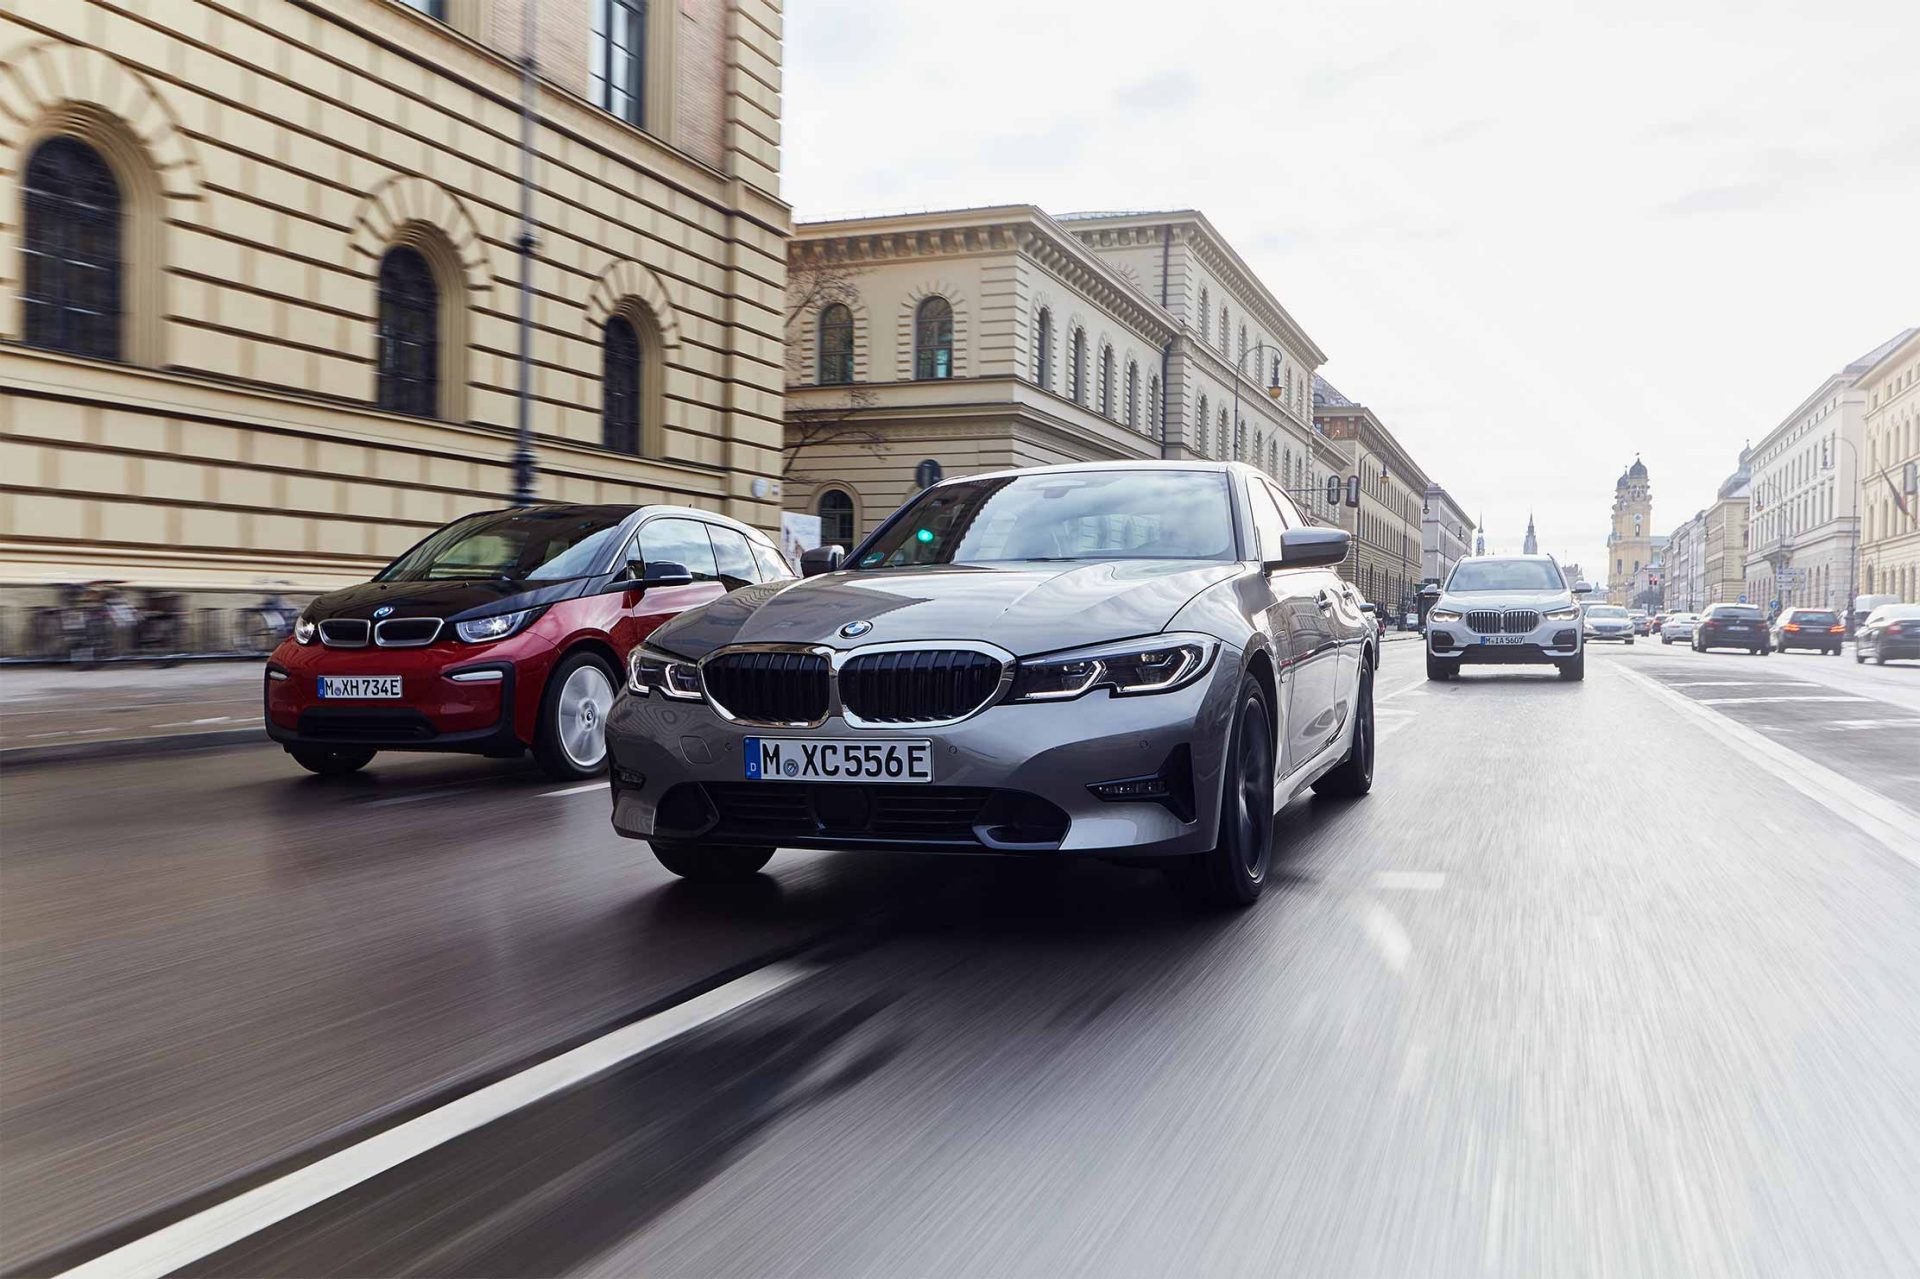 BMW vehicles in urban traffic